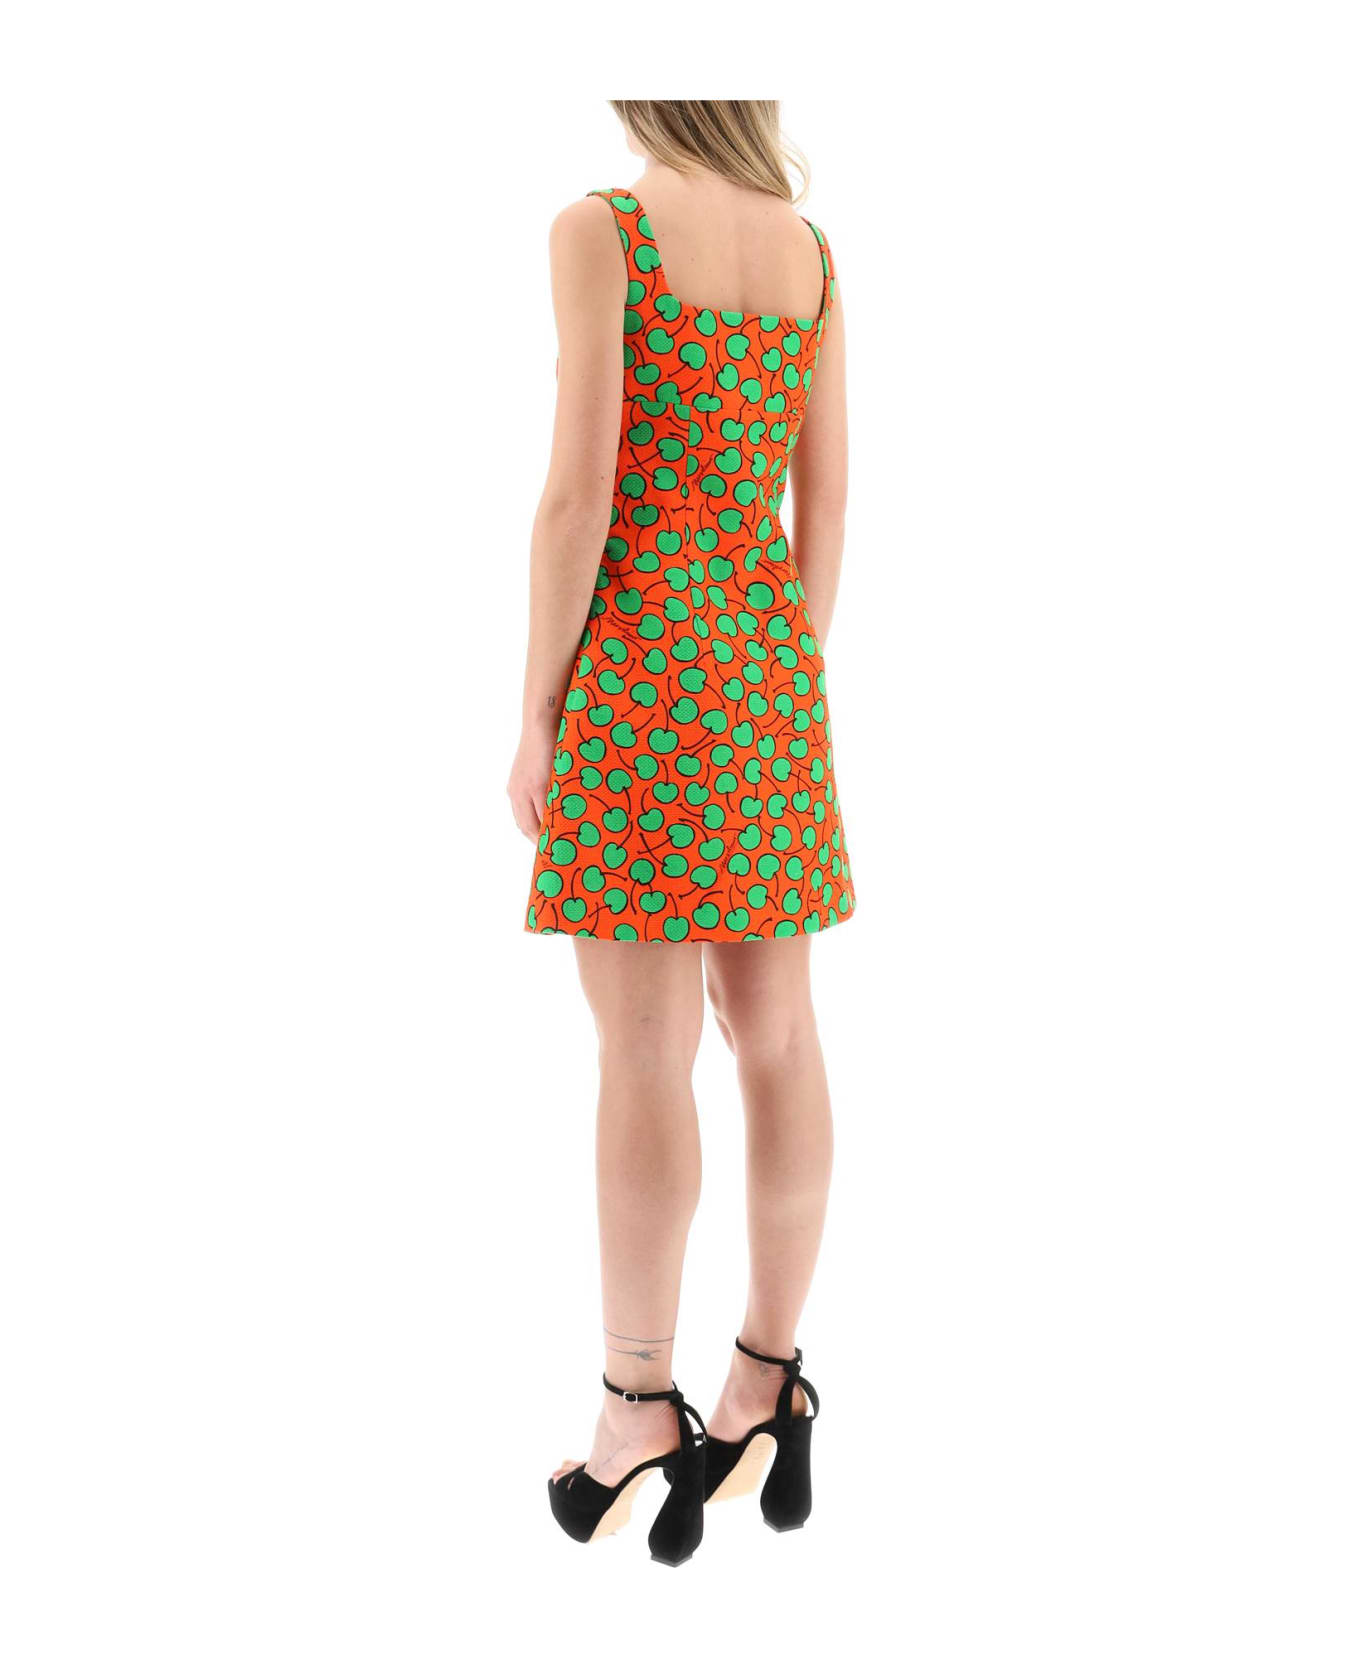 Moschino Cherry Print Short Dress - FANTASIA ROSSO (Orange)